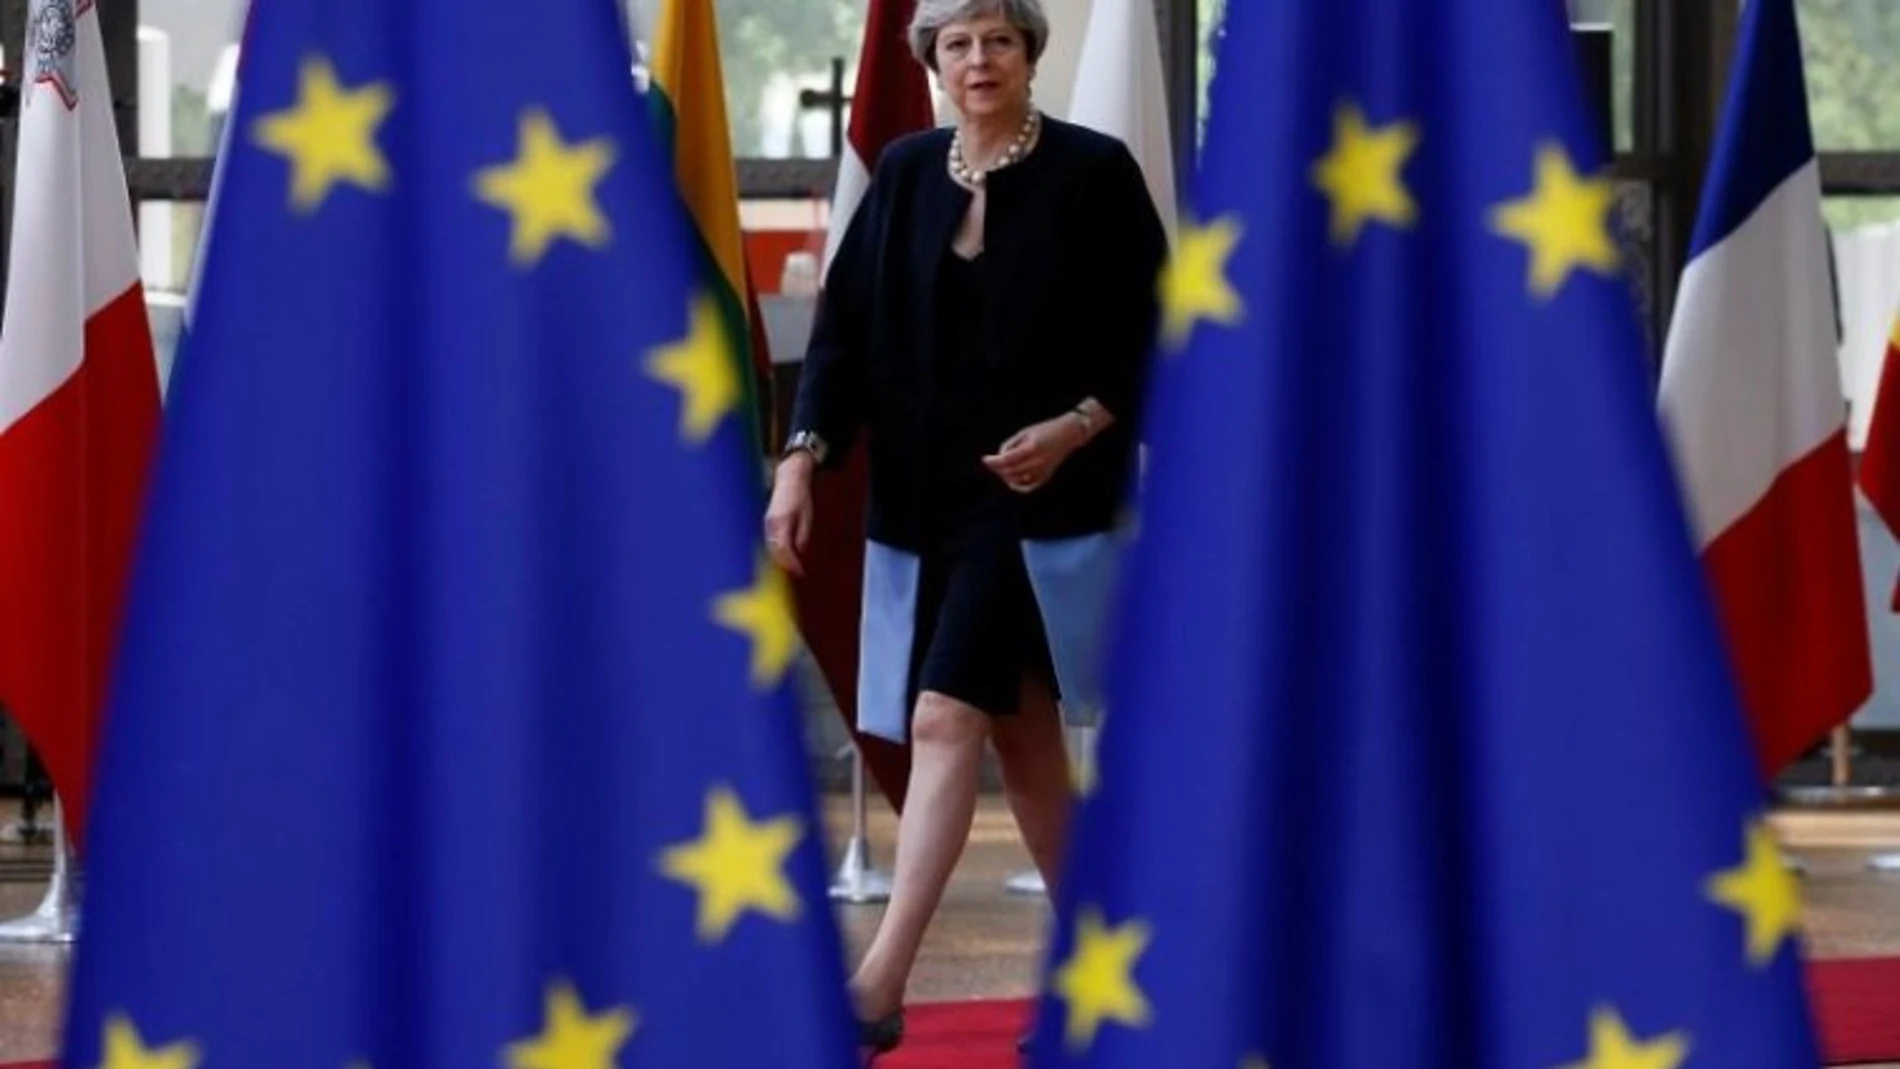 Theresa May, en una imagen de archivo / Reuters